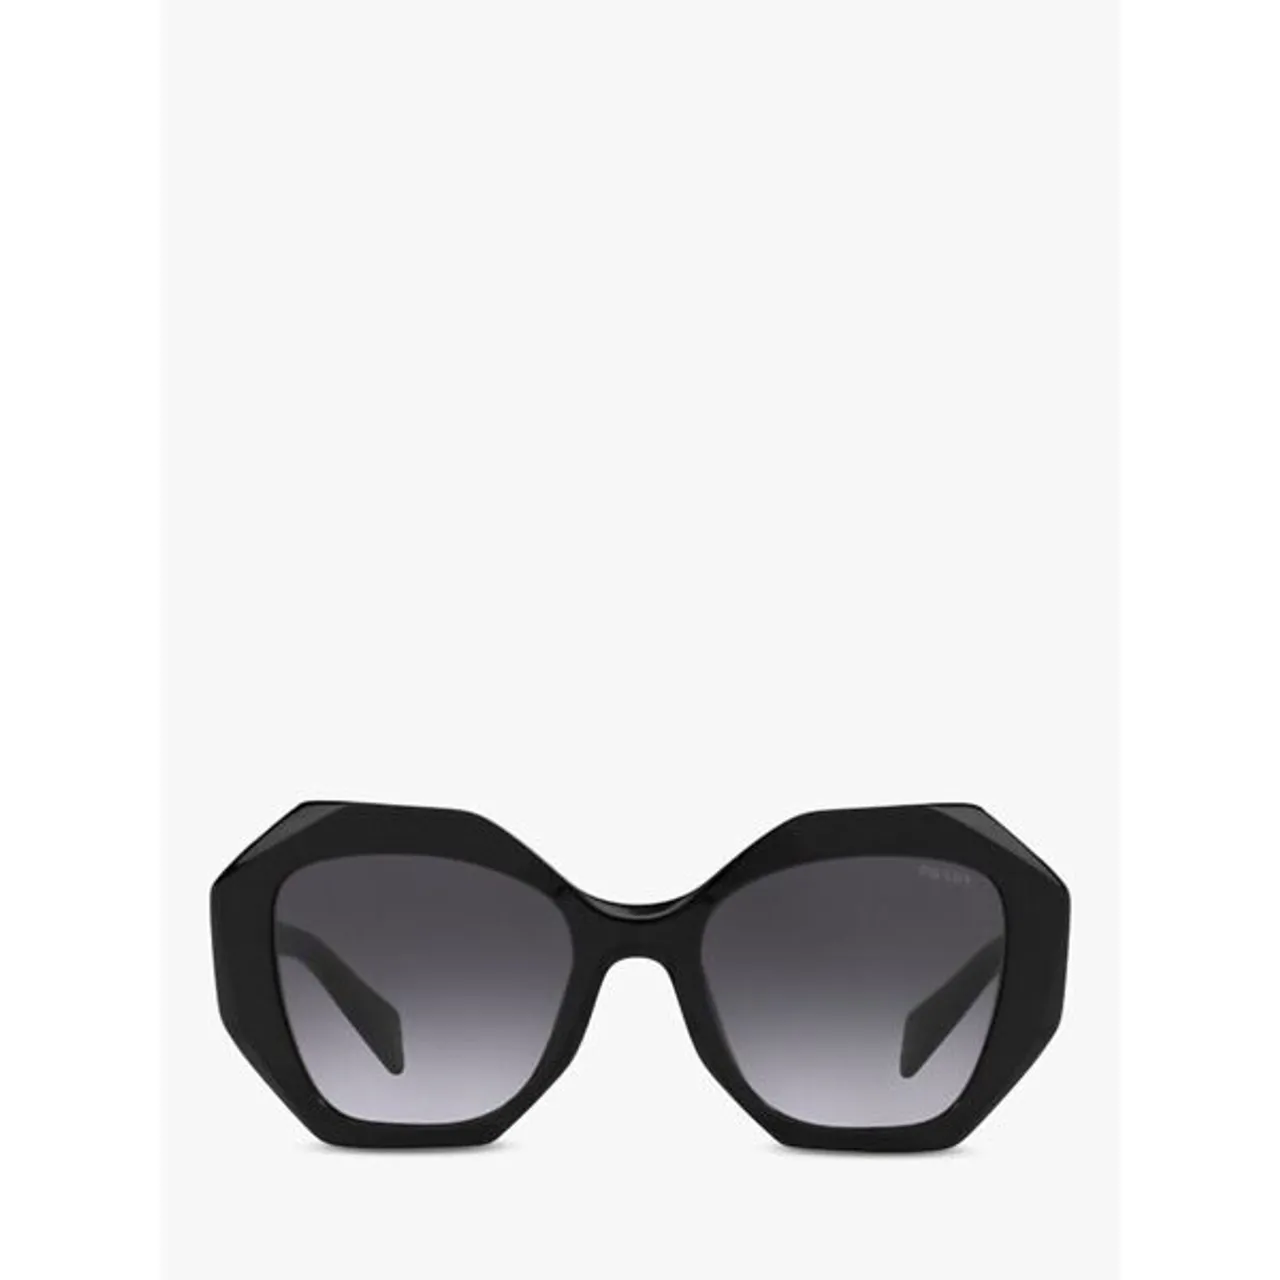 Prada PR 16WS Women's Irregular Shaped Sunglasses - Black/Black Gradient - Female